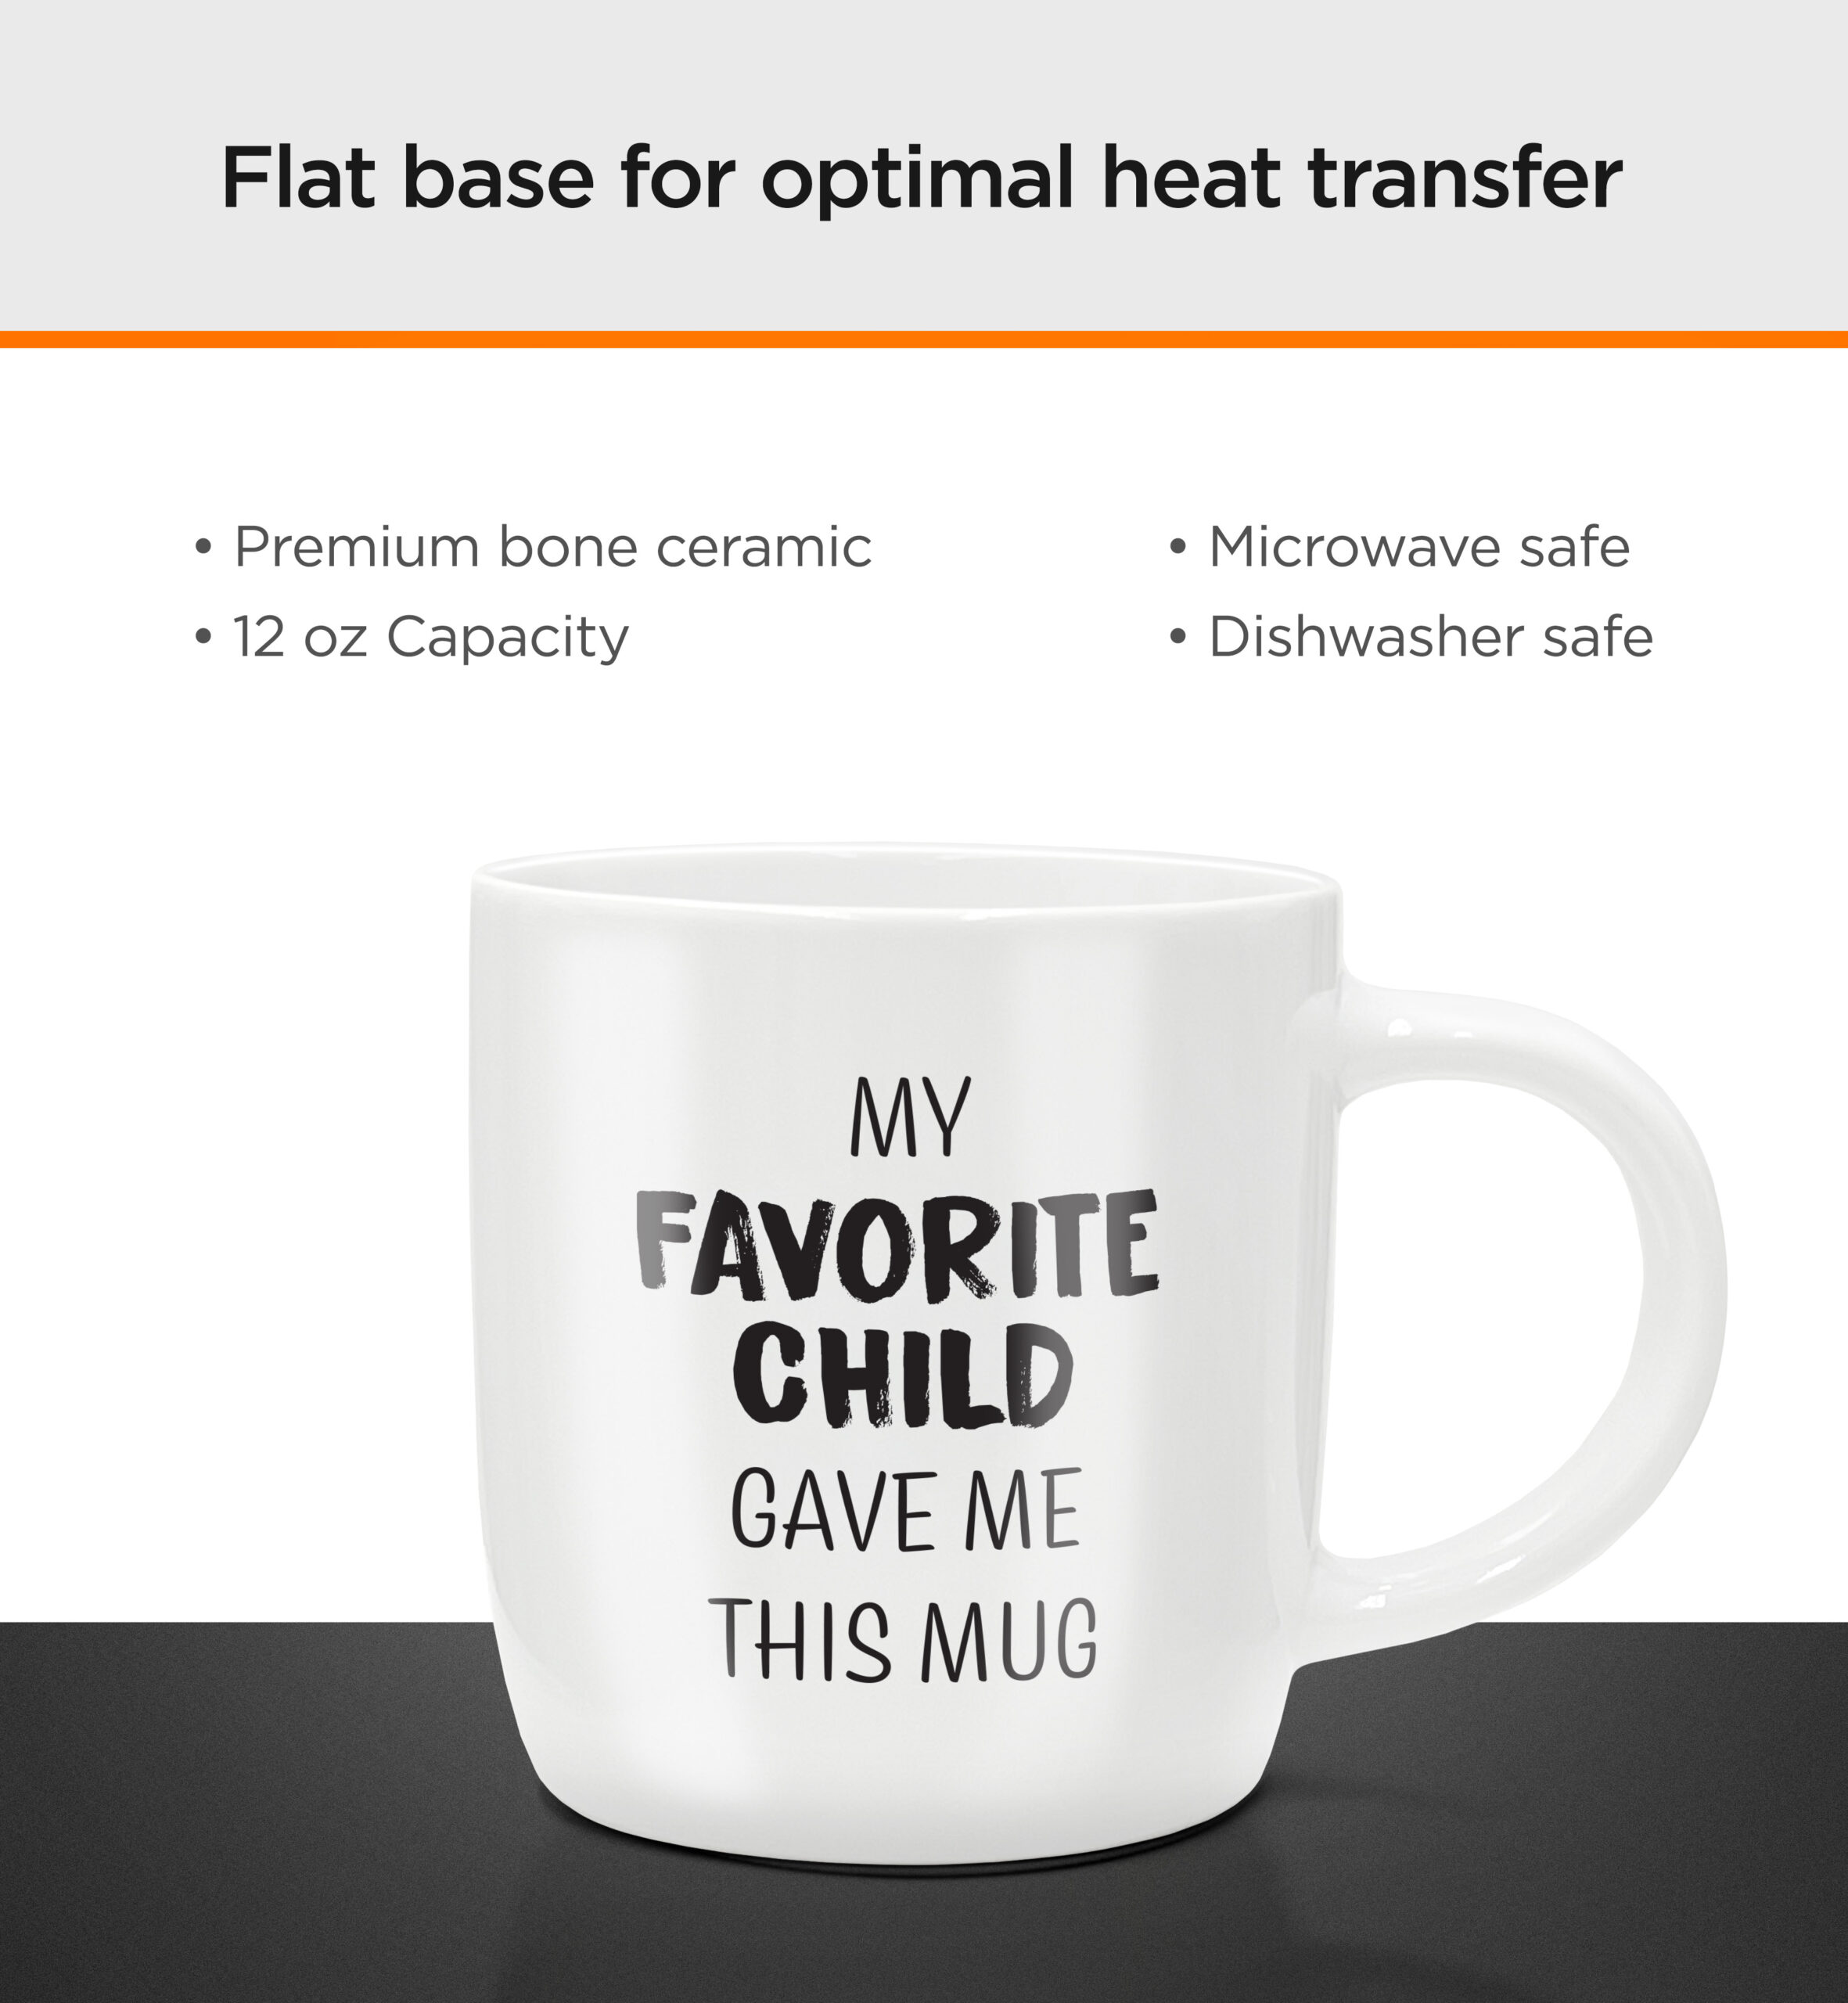 Flat Bottom Coffee Mug For Warmer